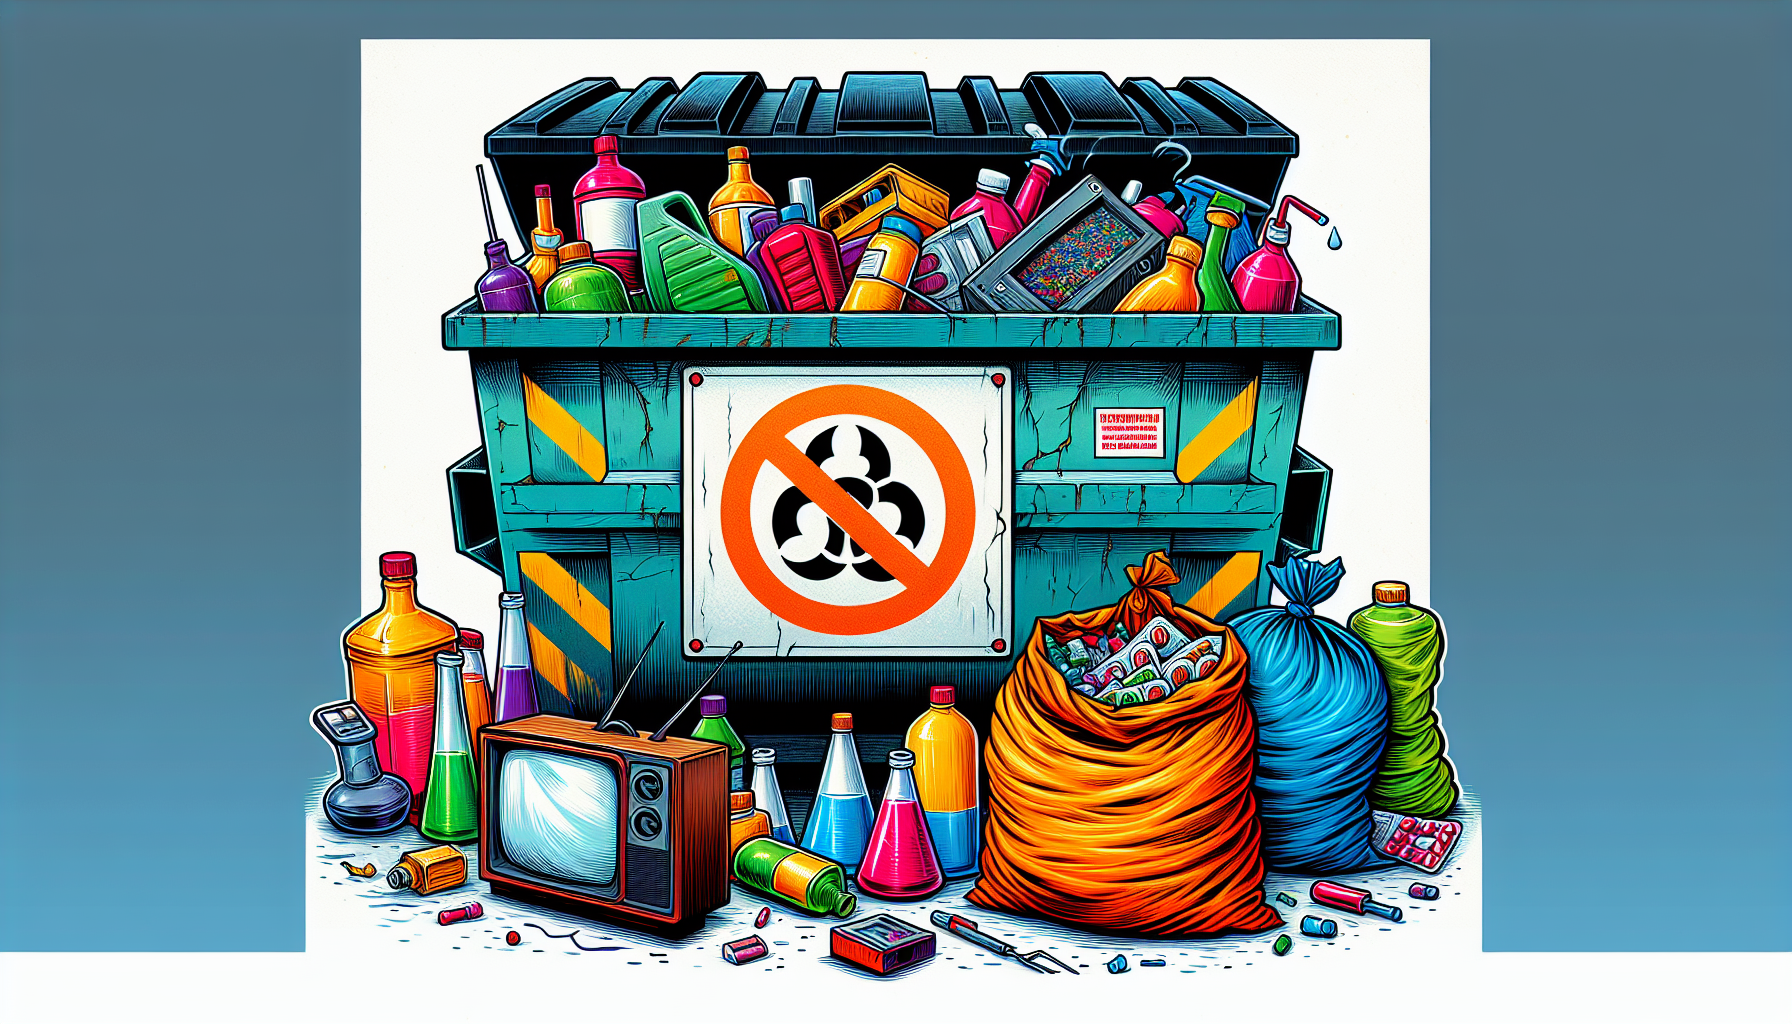 Prohibited items and hazardous materials